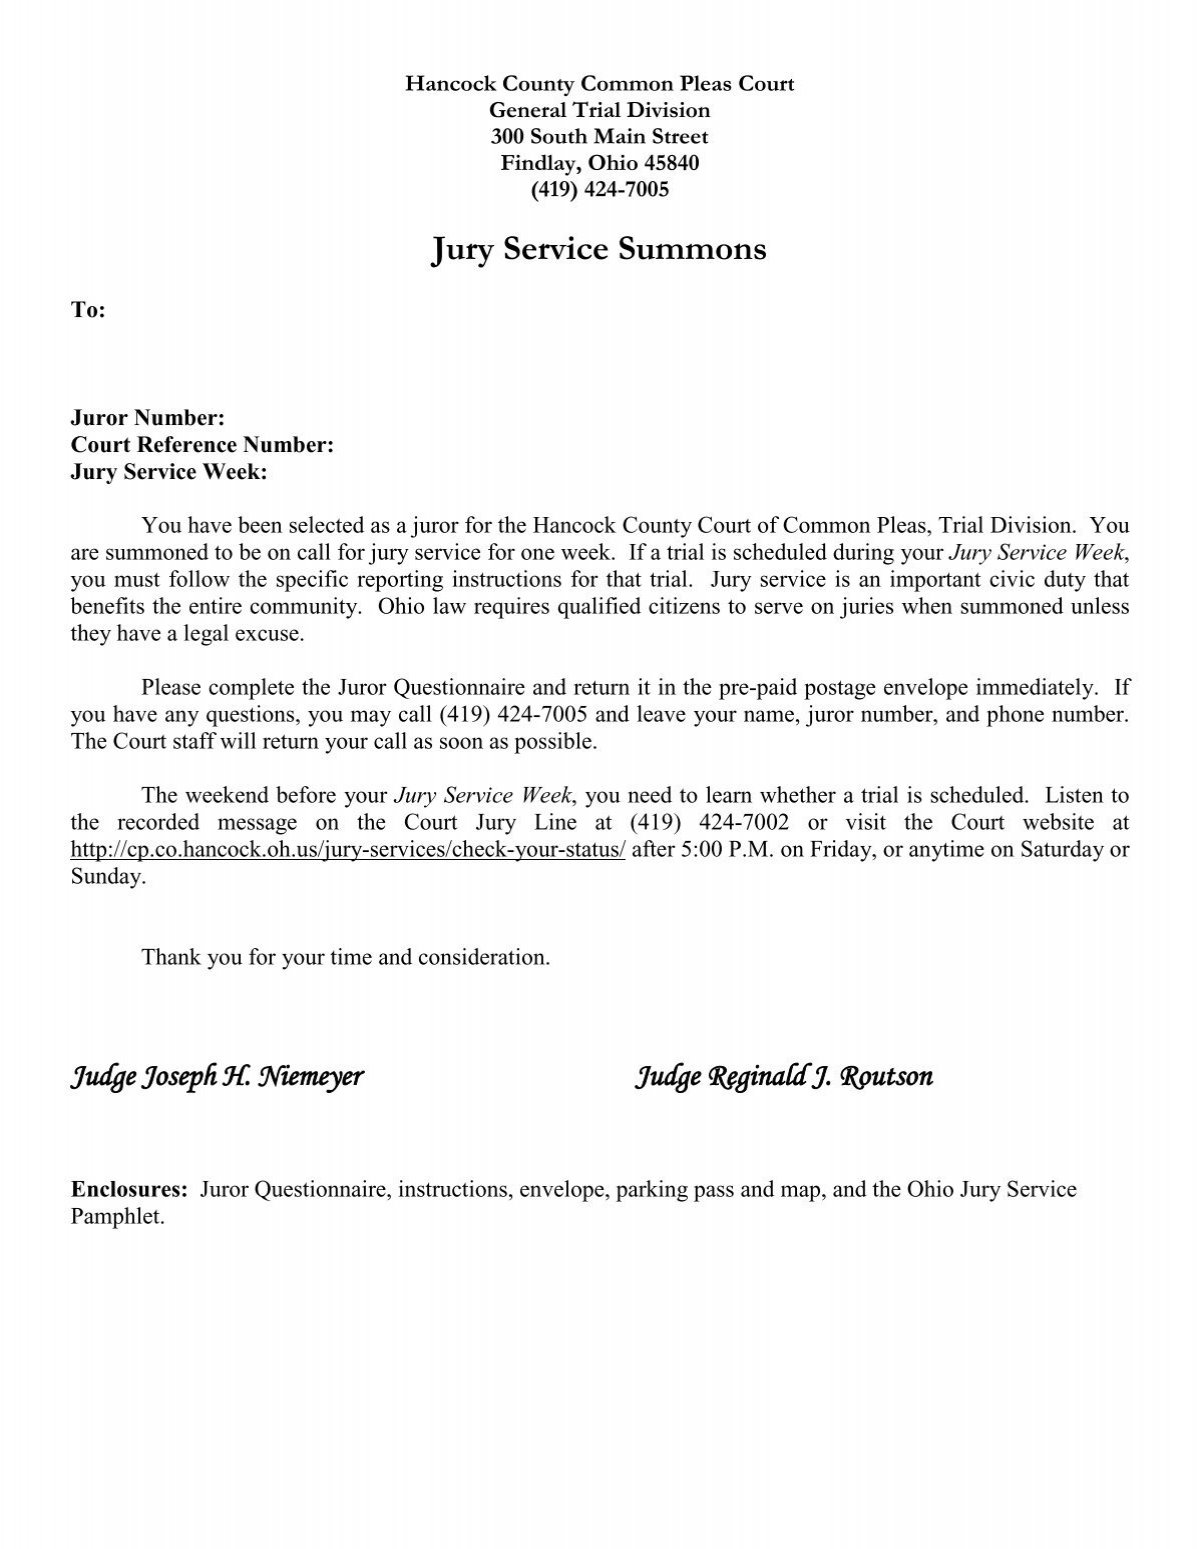 Jury Service Summons Hancock County Common Pleas Court